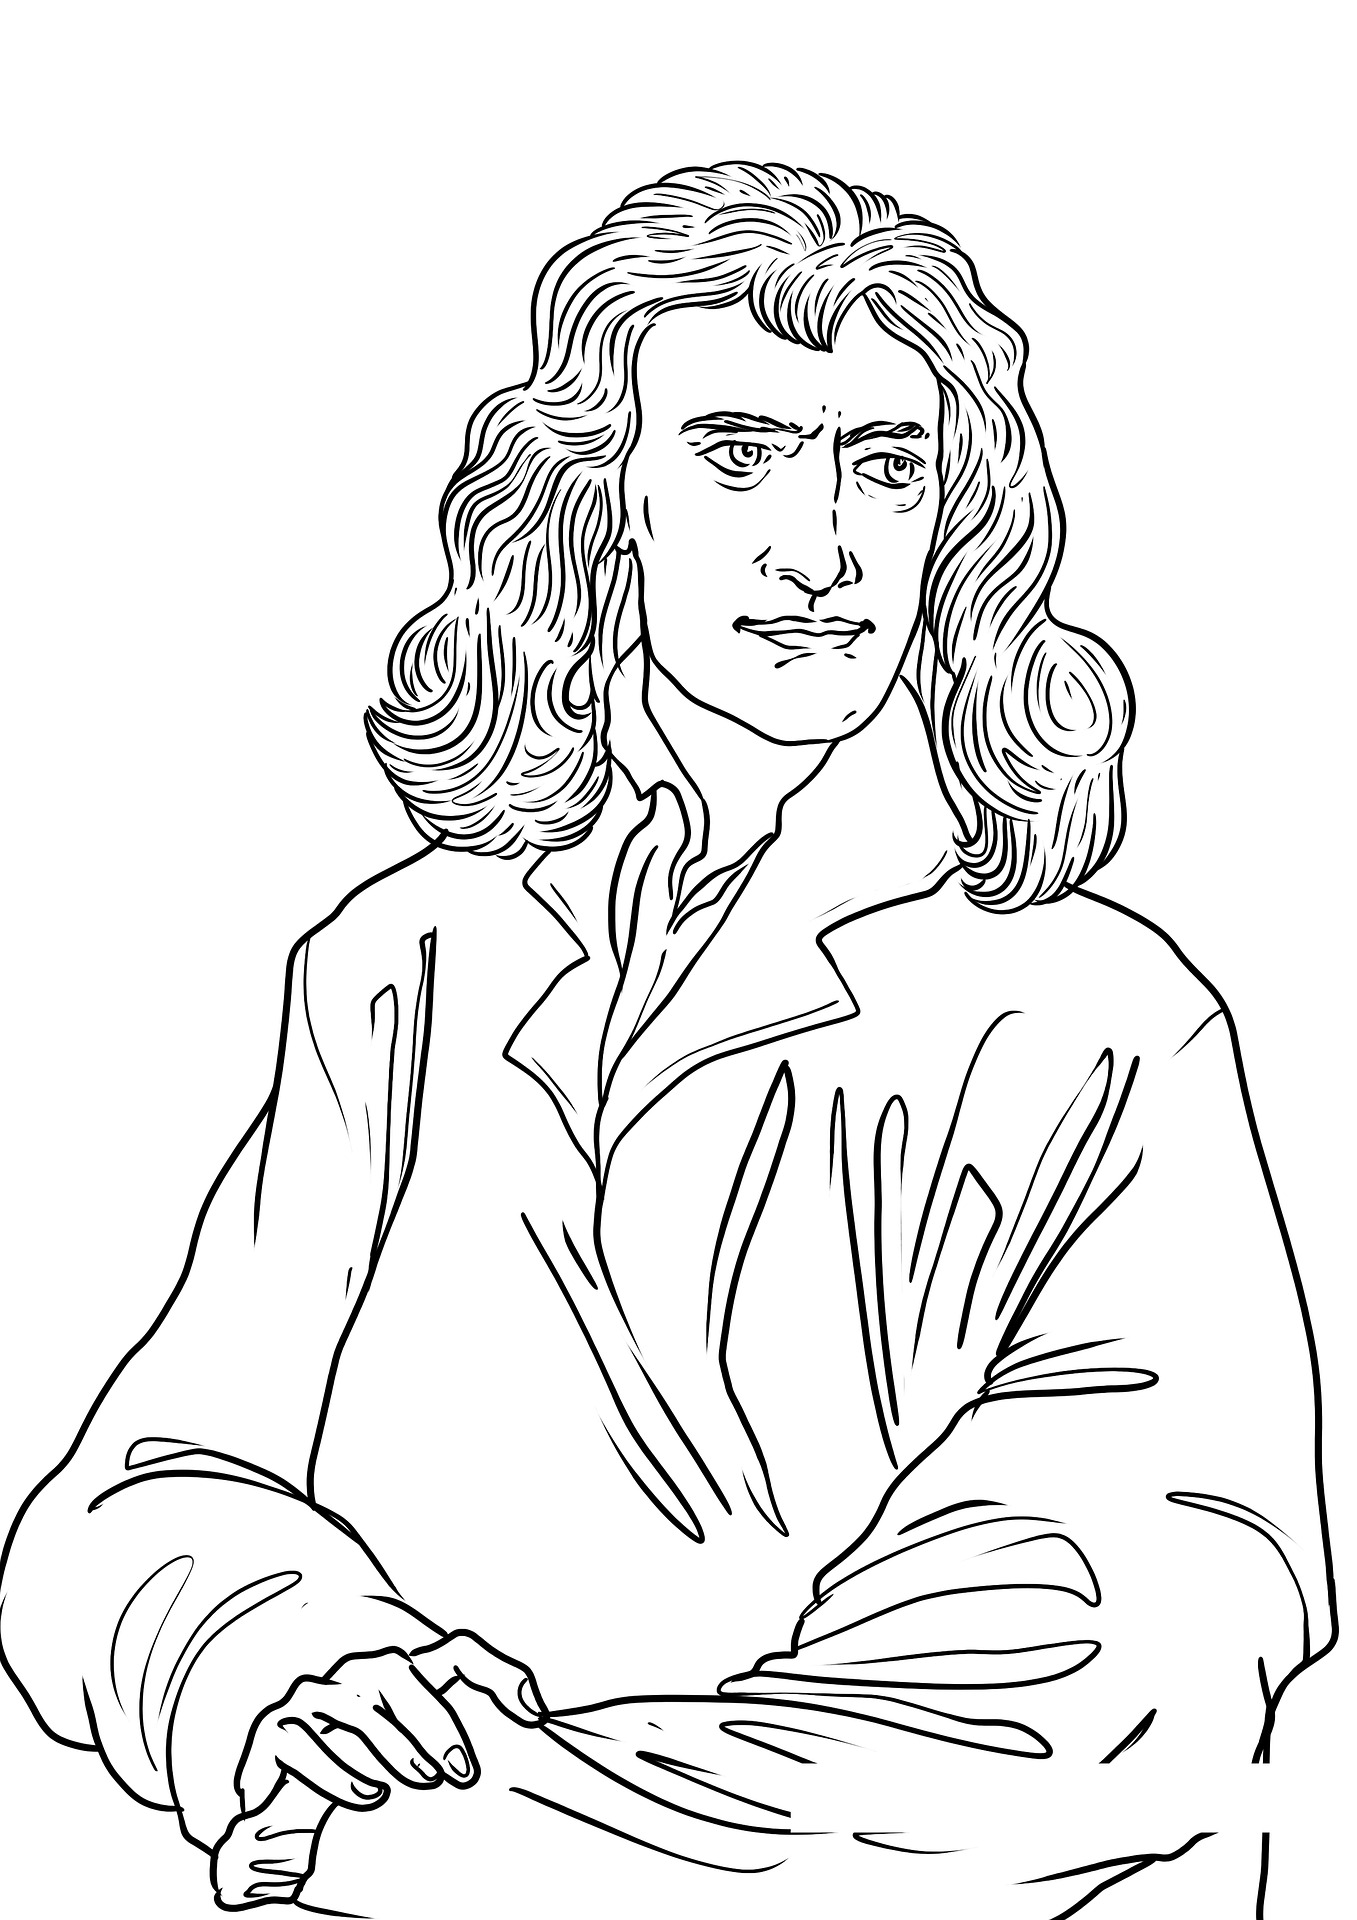 Sir Isaac Newton developed gravitational theory